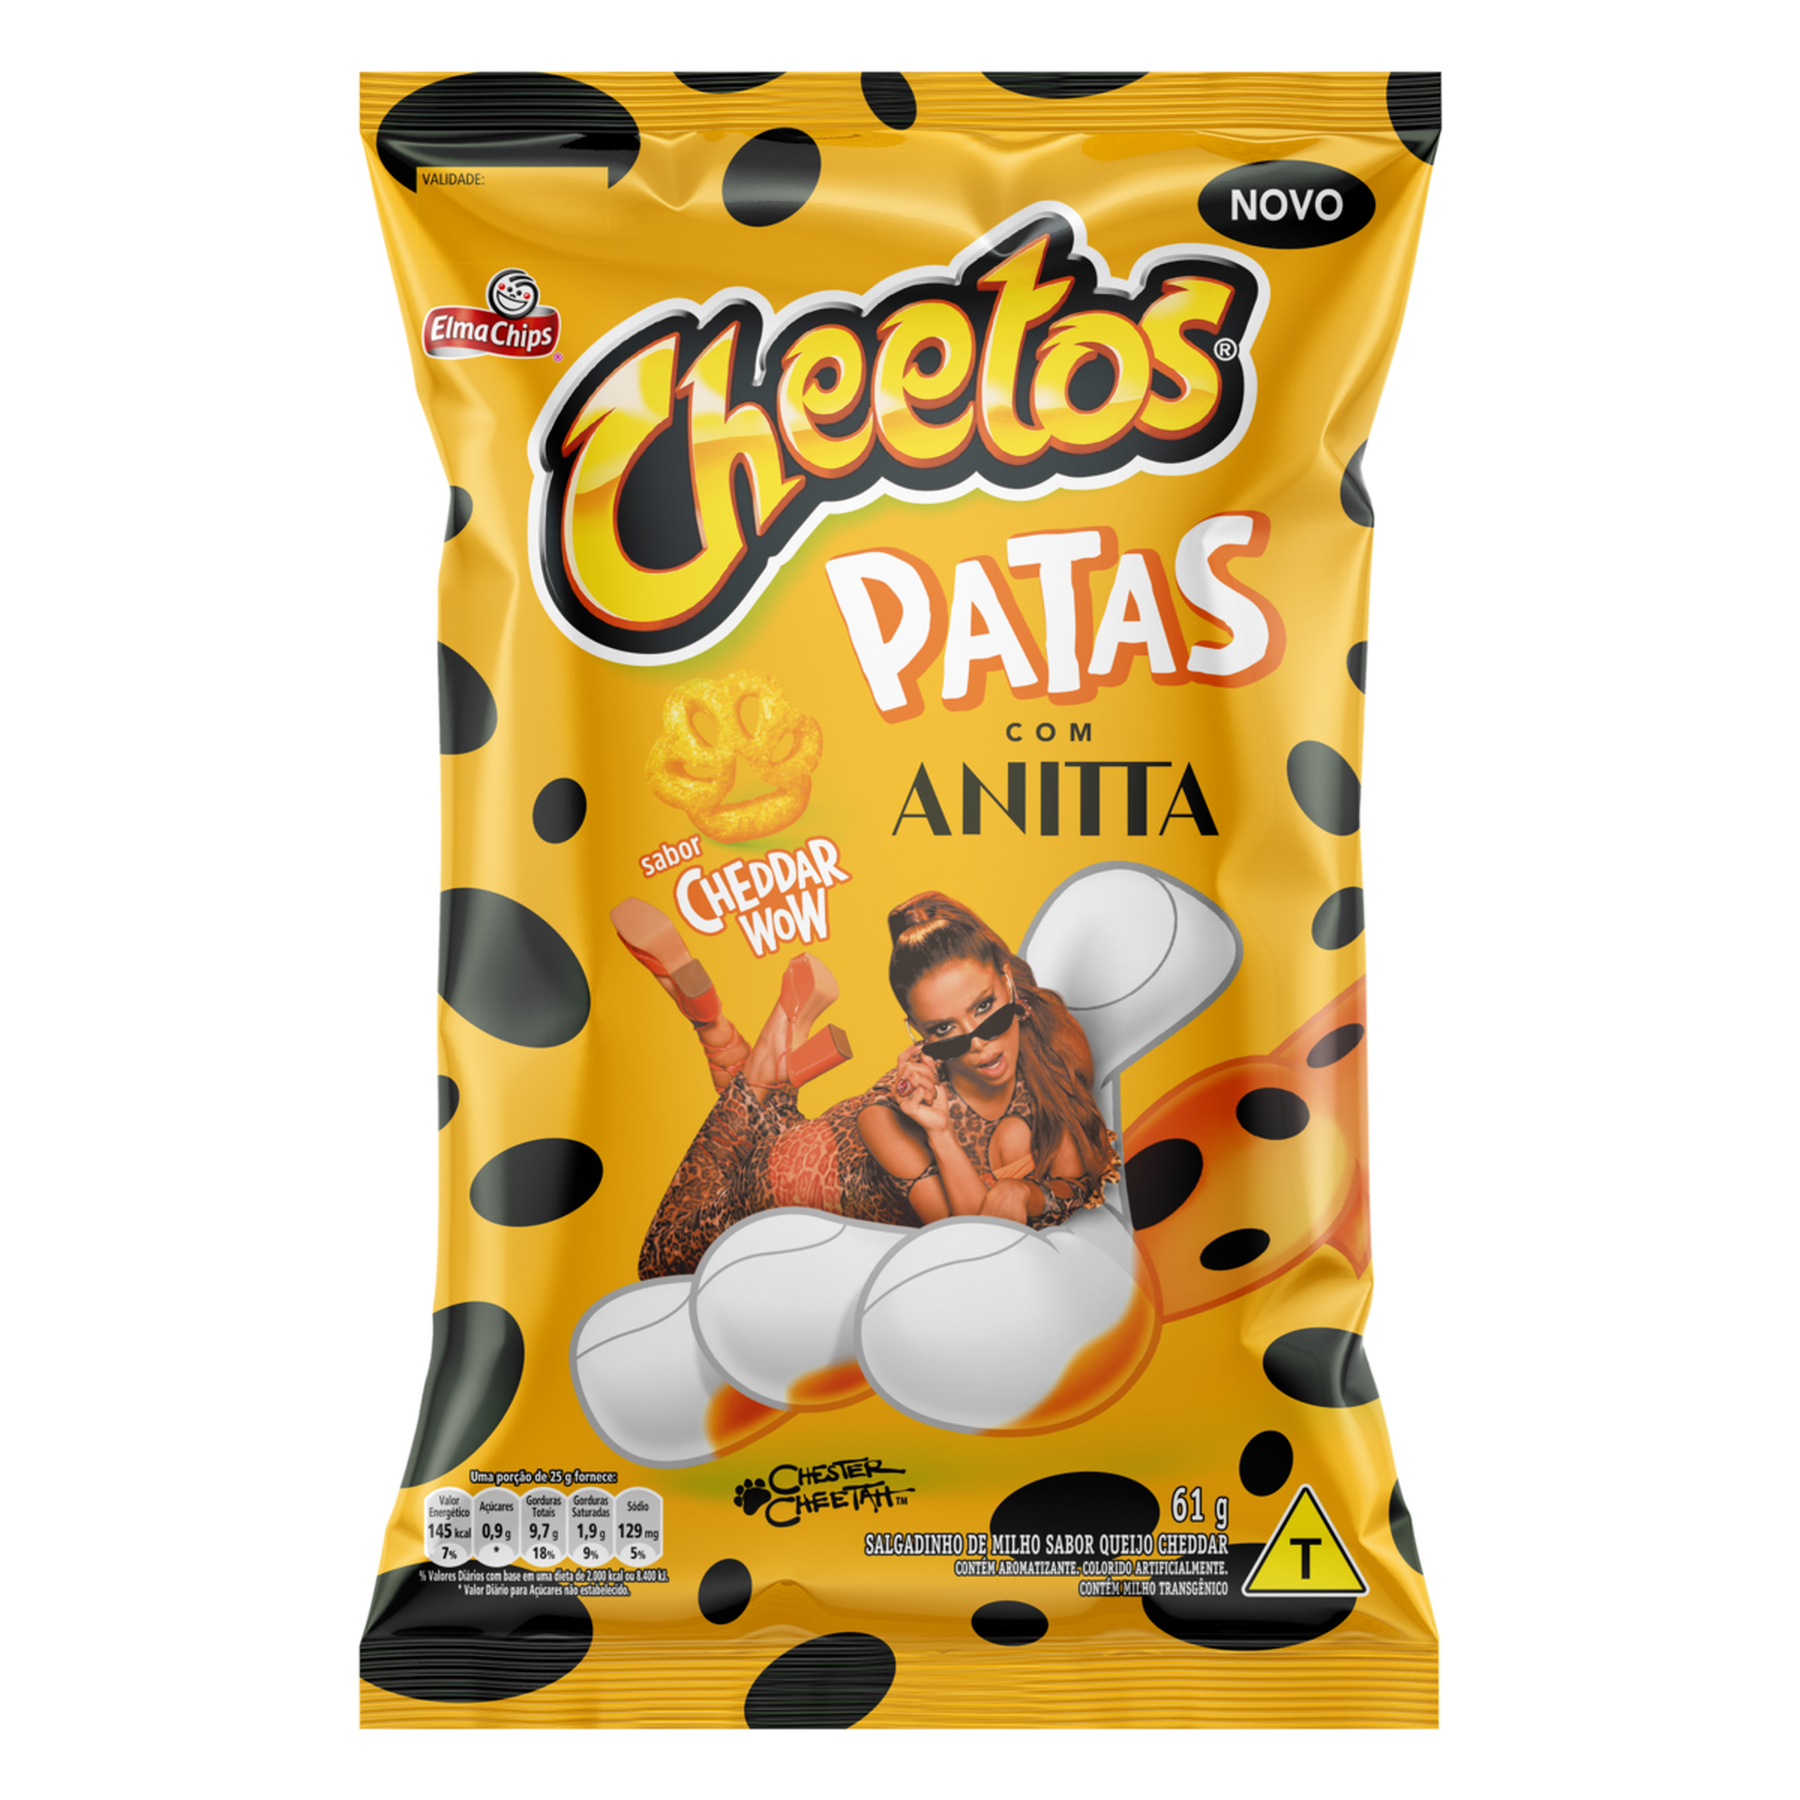 Cheetos REQUEIJÃO (ELMA CHIPS) – Brazilian Market